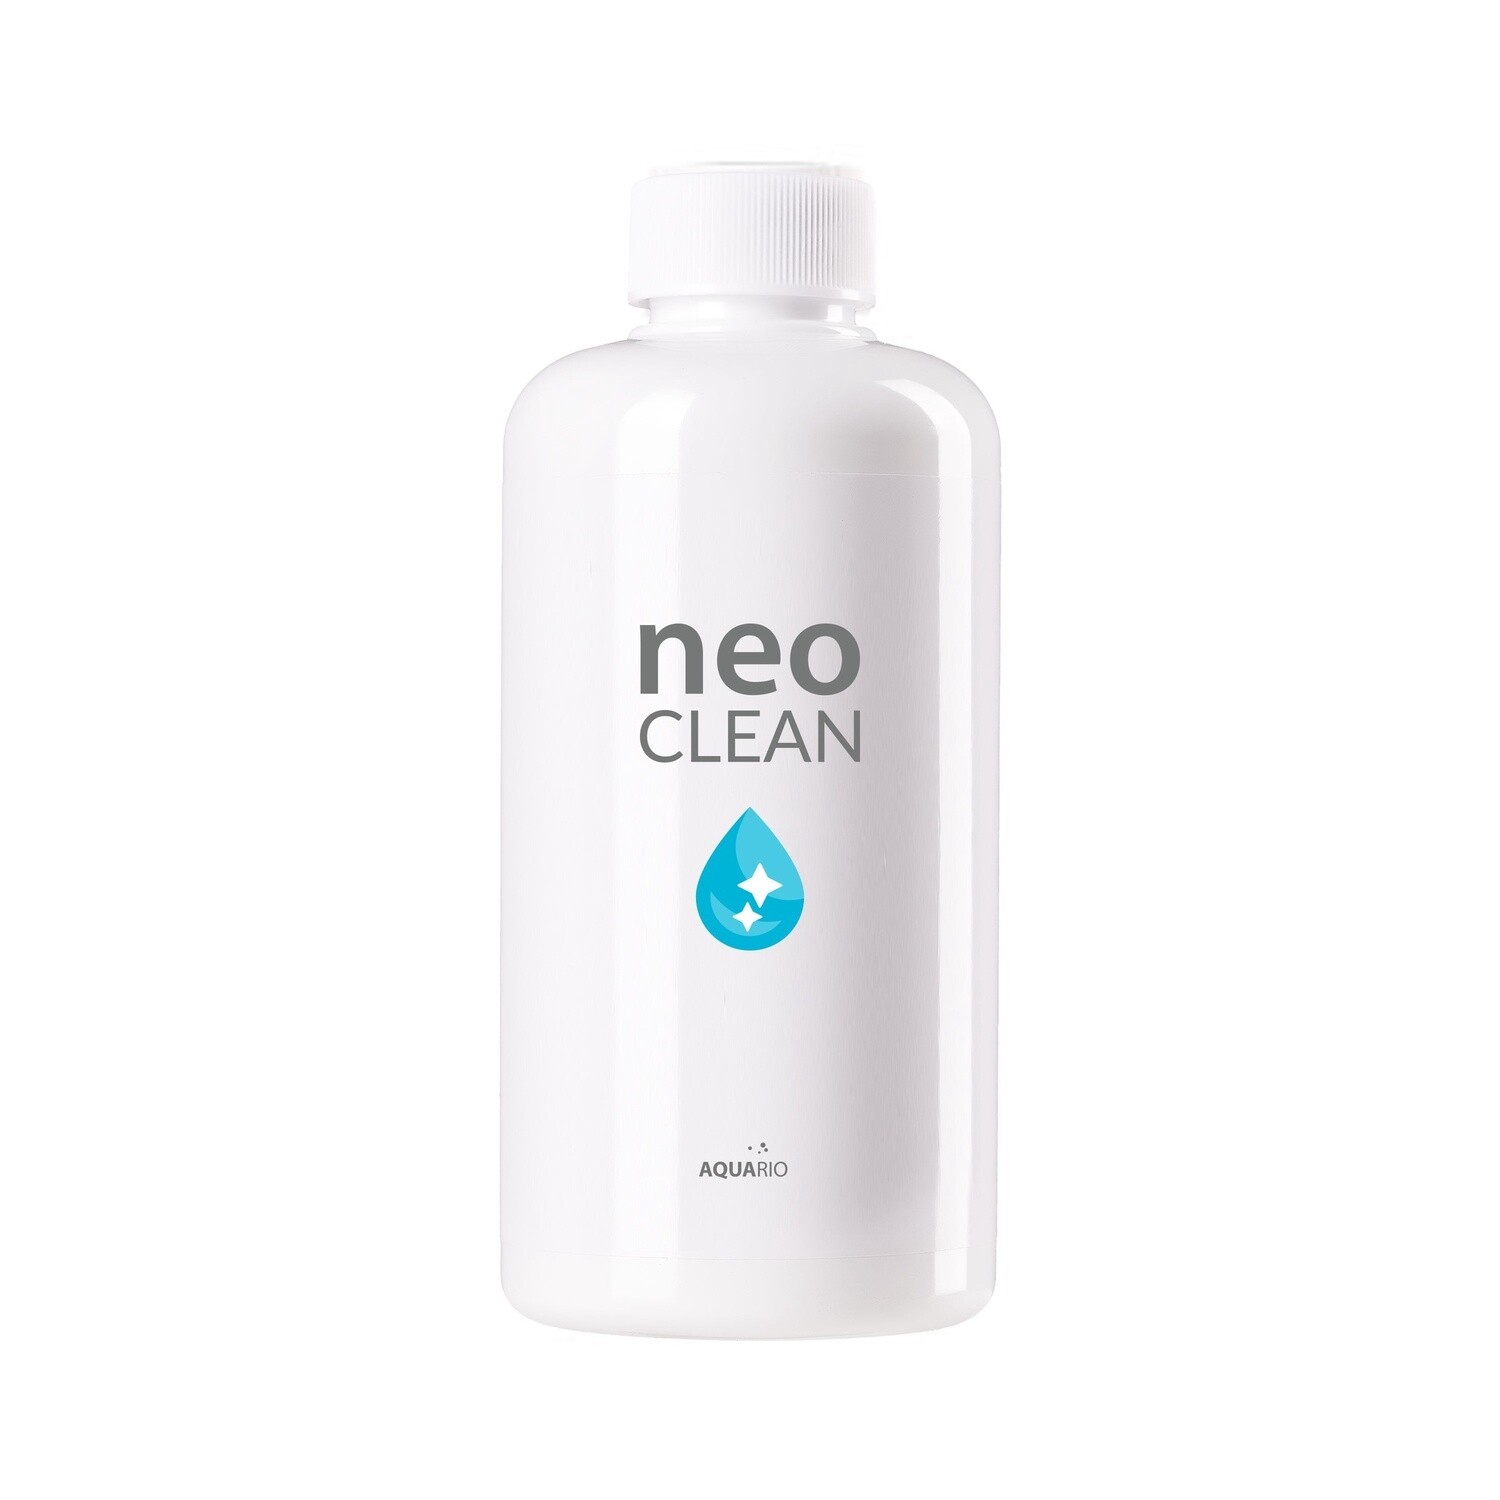 Neo Clean, volume: Neo Clean 300ml